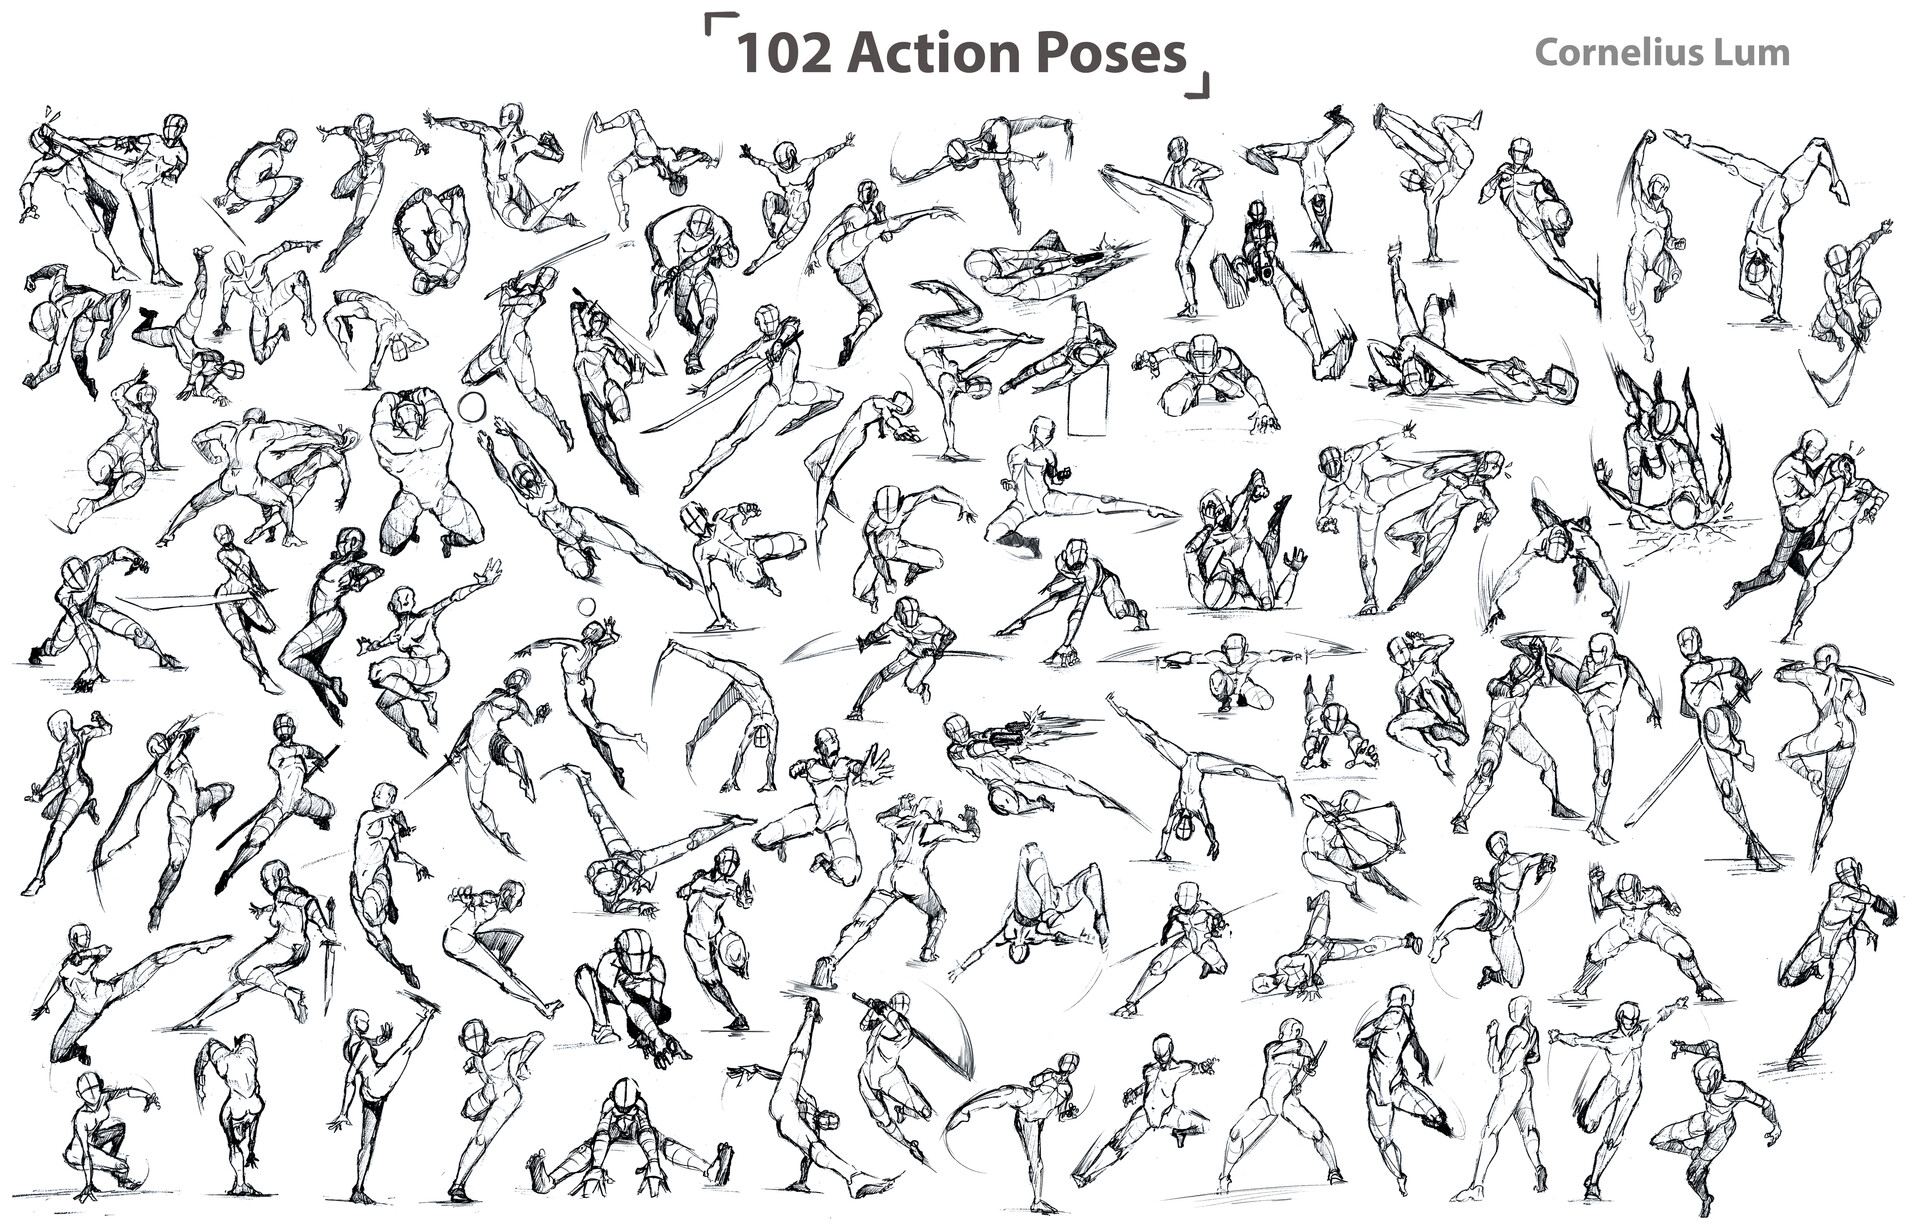 Figure Drawing Practice-Anatomy pose drawing- Female sitting pose - YouTube